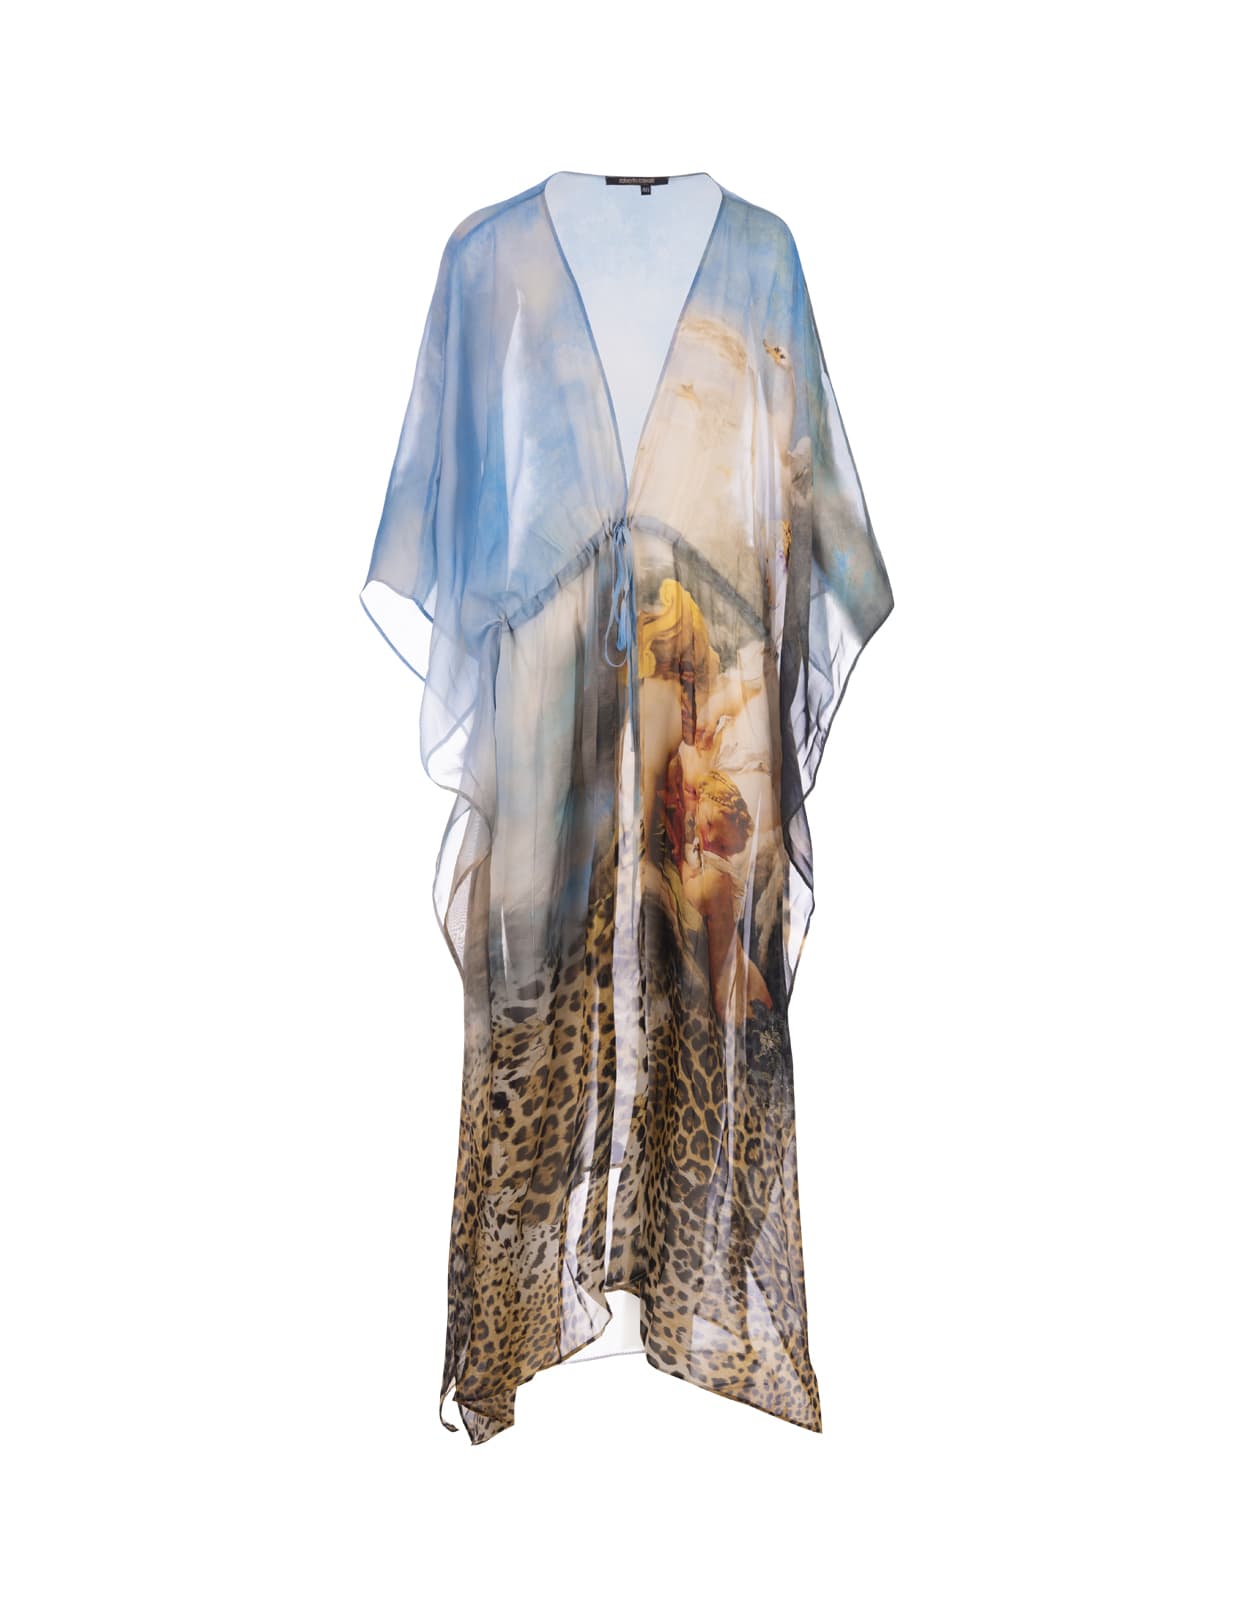 dressing gownRTO CAVALLI SILK KAFTAN DRESS WITH PRINT